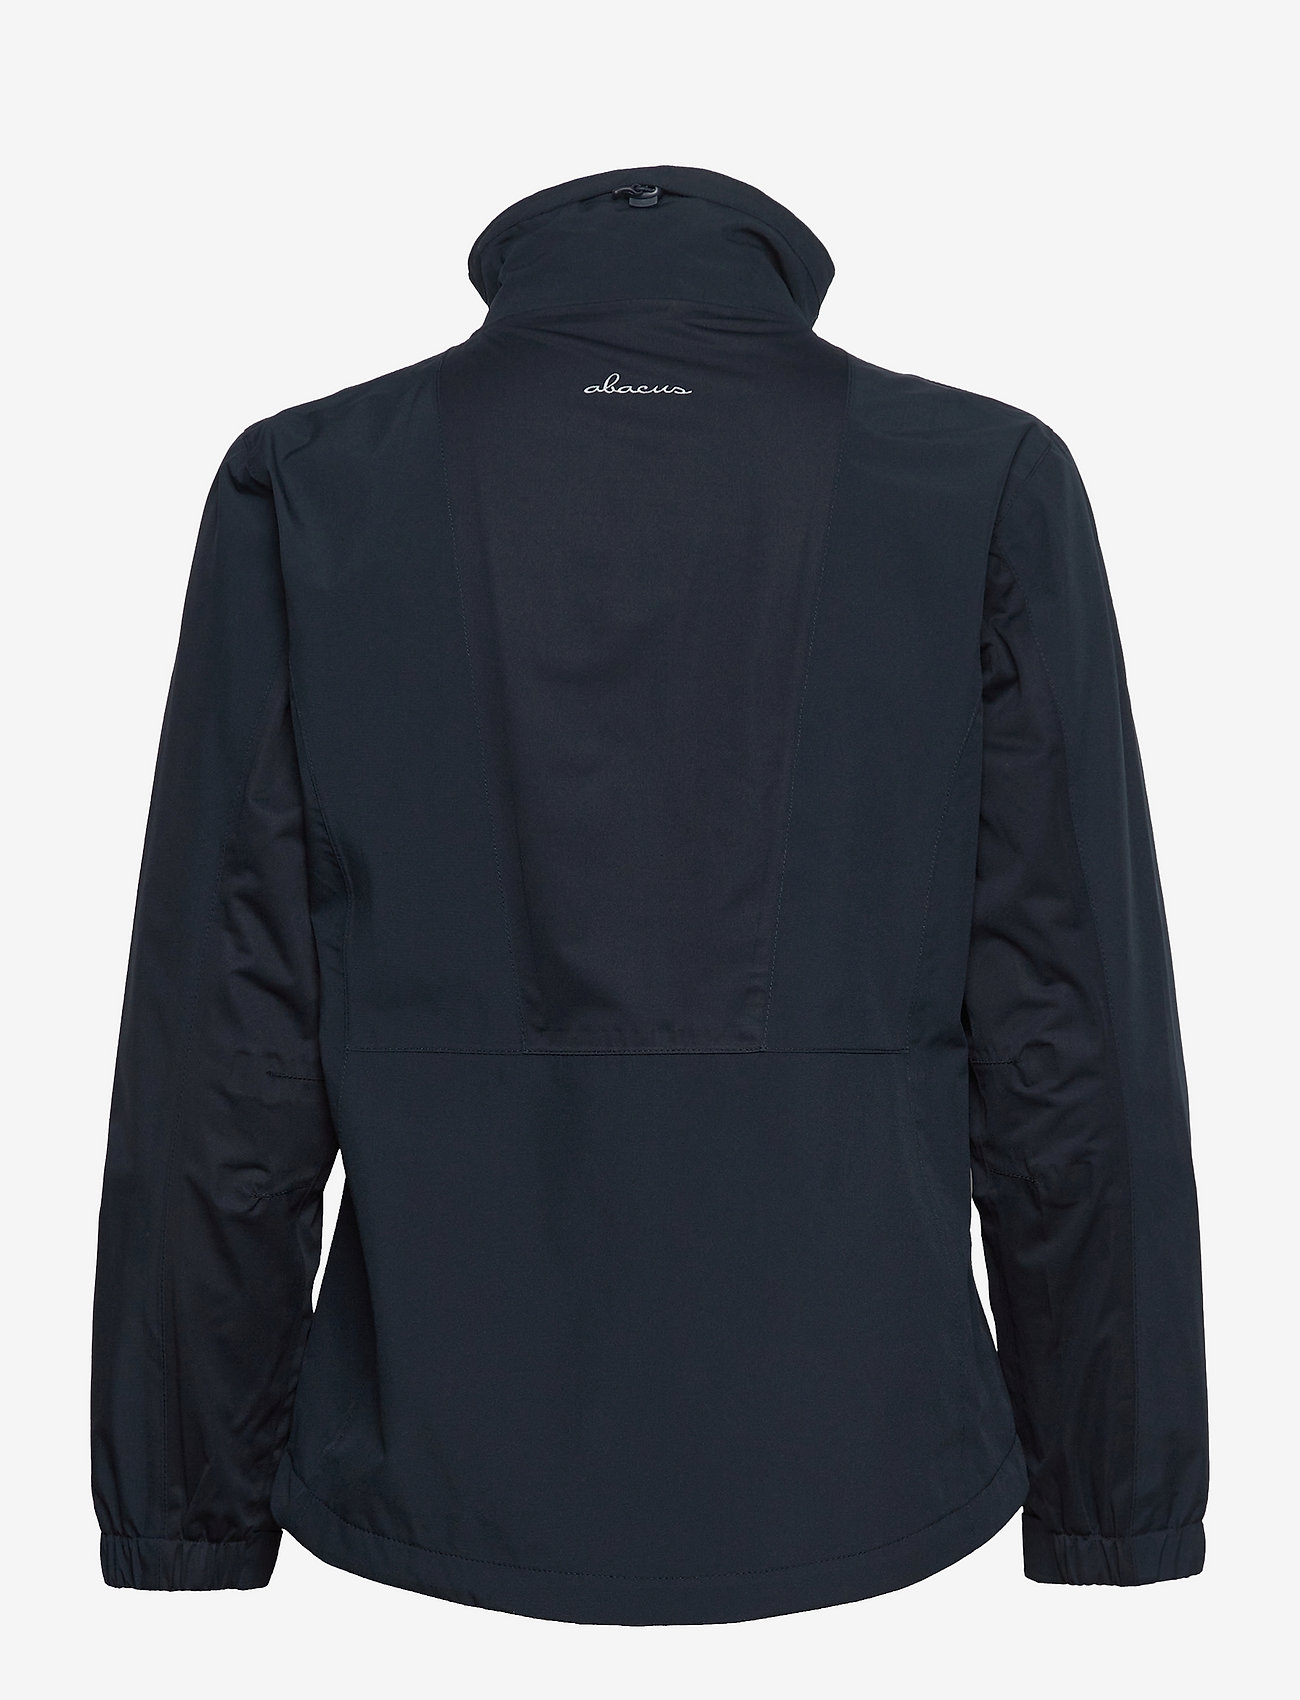 Abacus - Lds Pines rain jacket - golfjassen - navy - 1